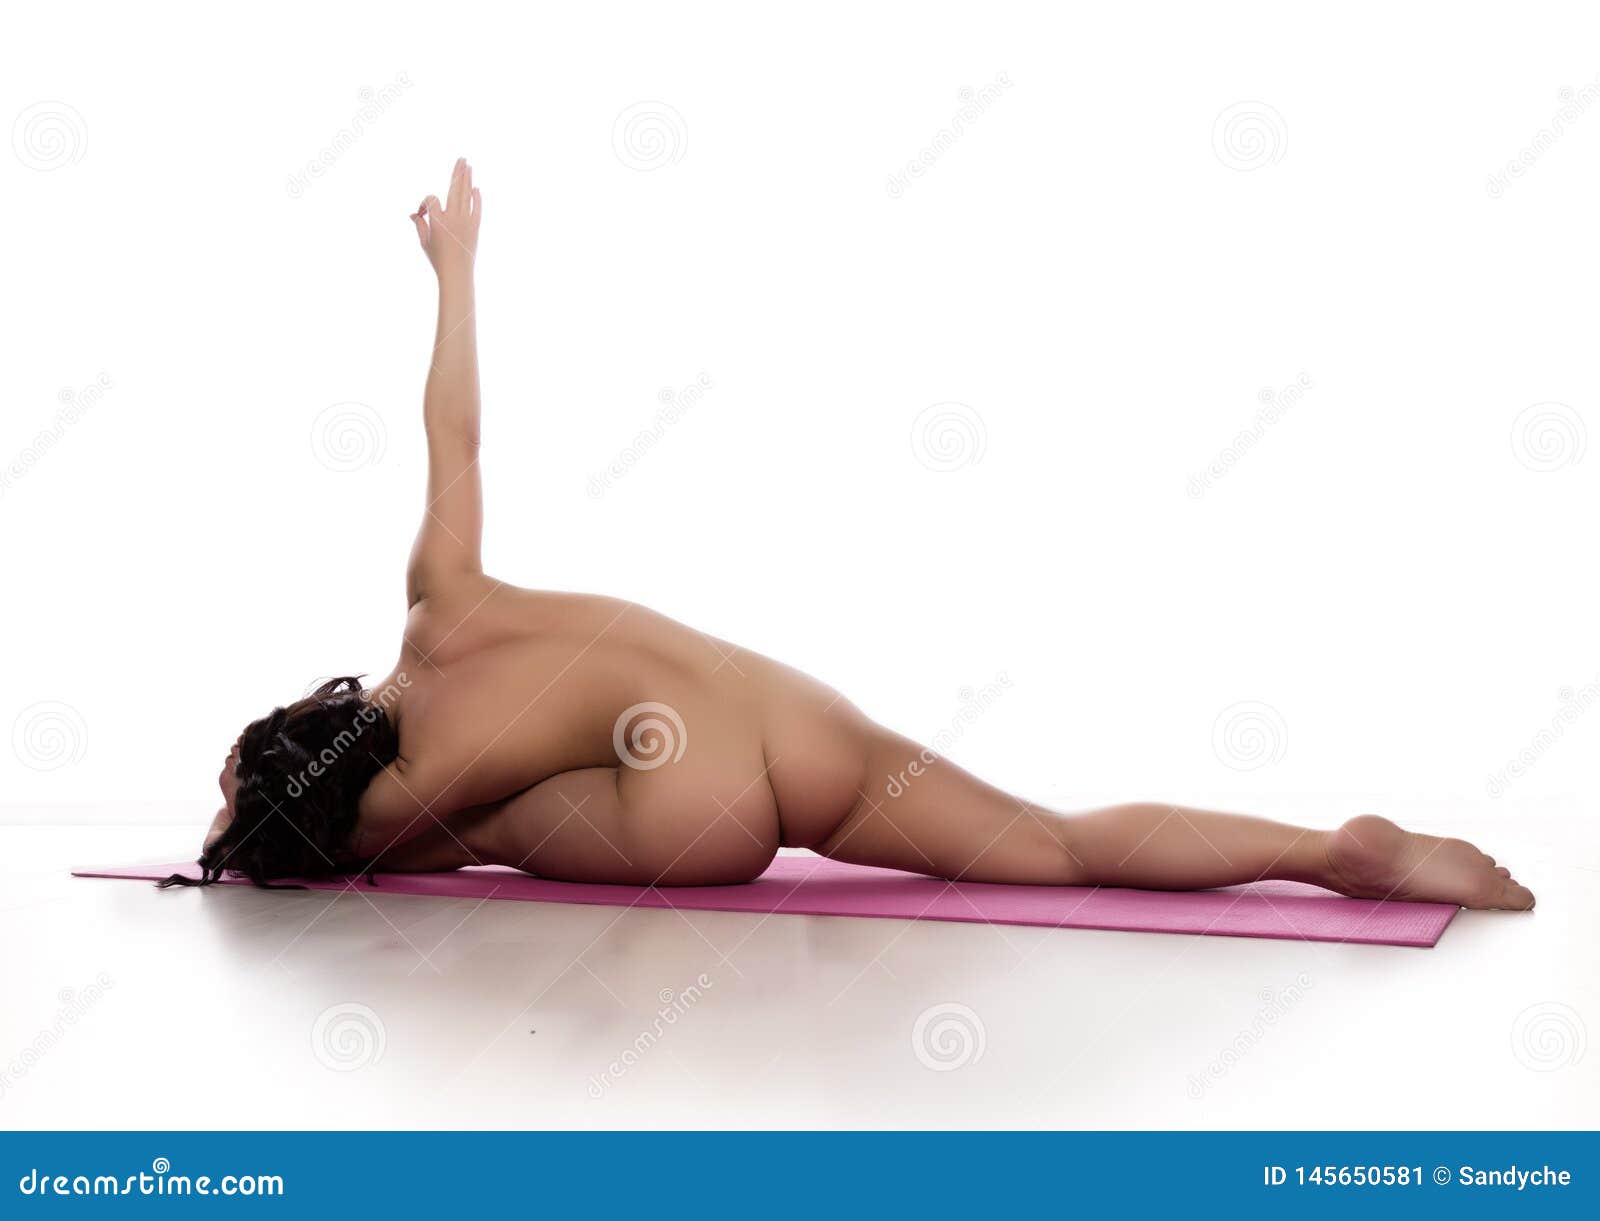 darlene olafson recommends hot women doing naked yoga pic